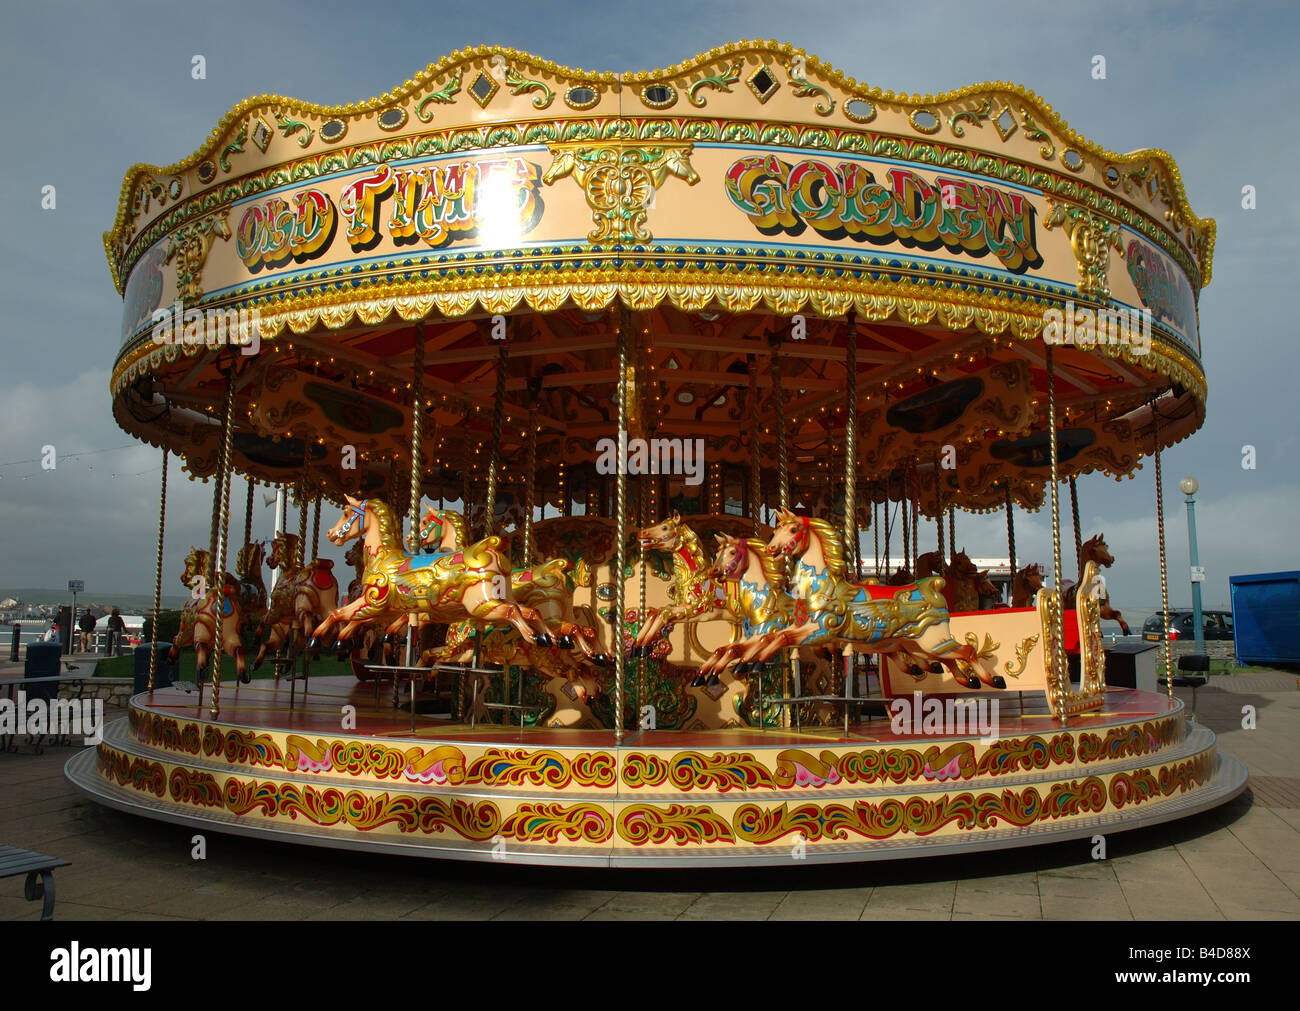 Fairground carousel, Weymouth, Dorset, England, UK Banque D'Images